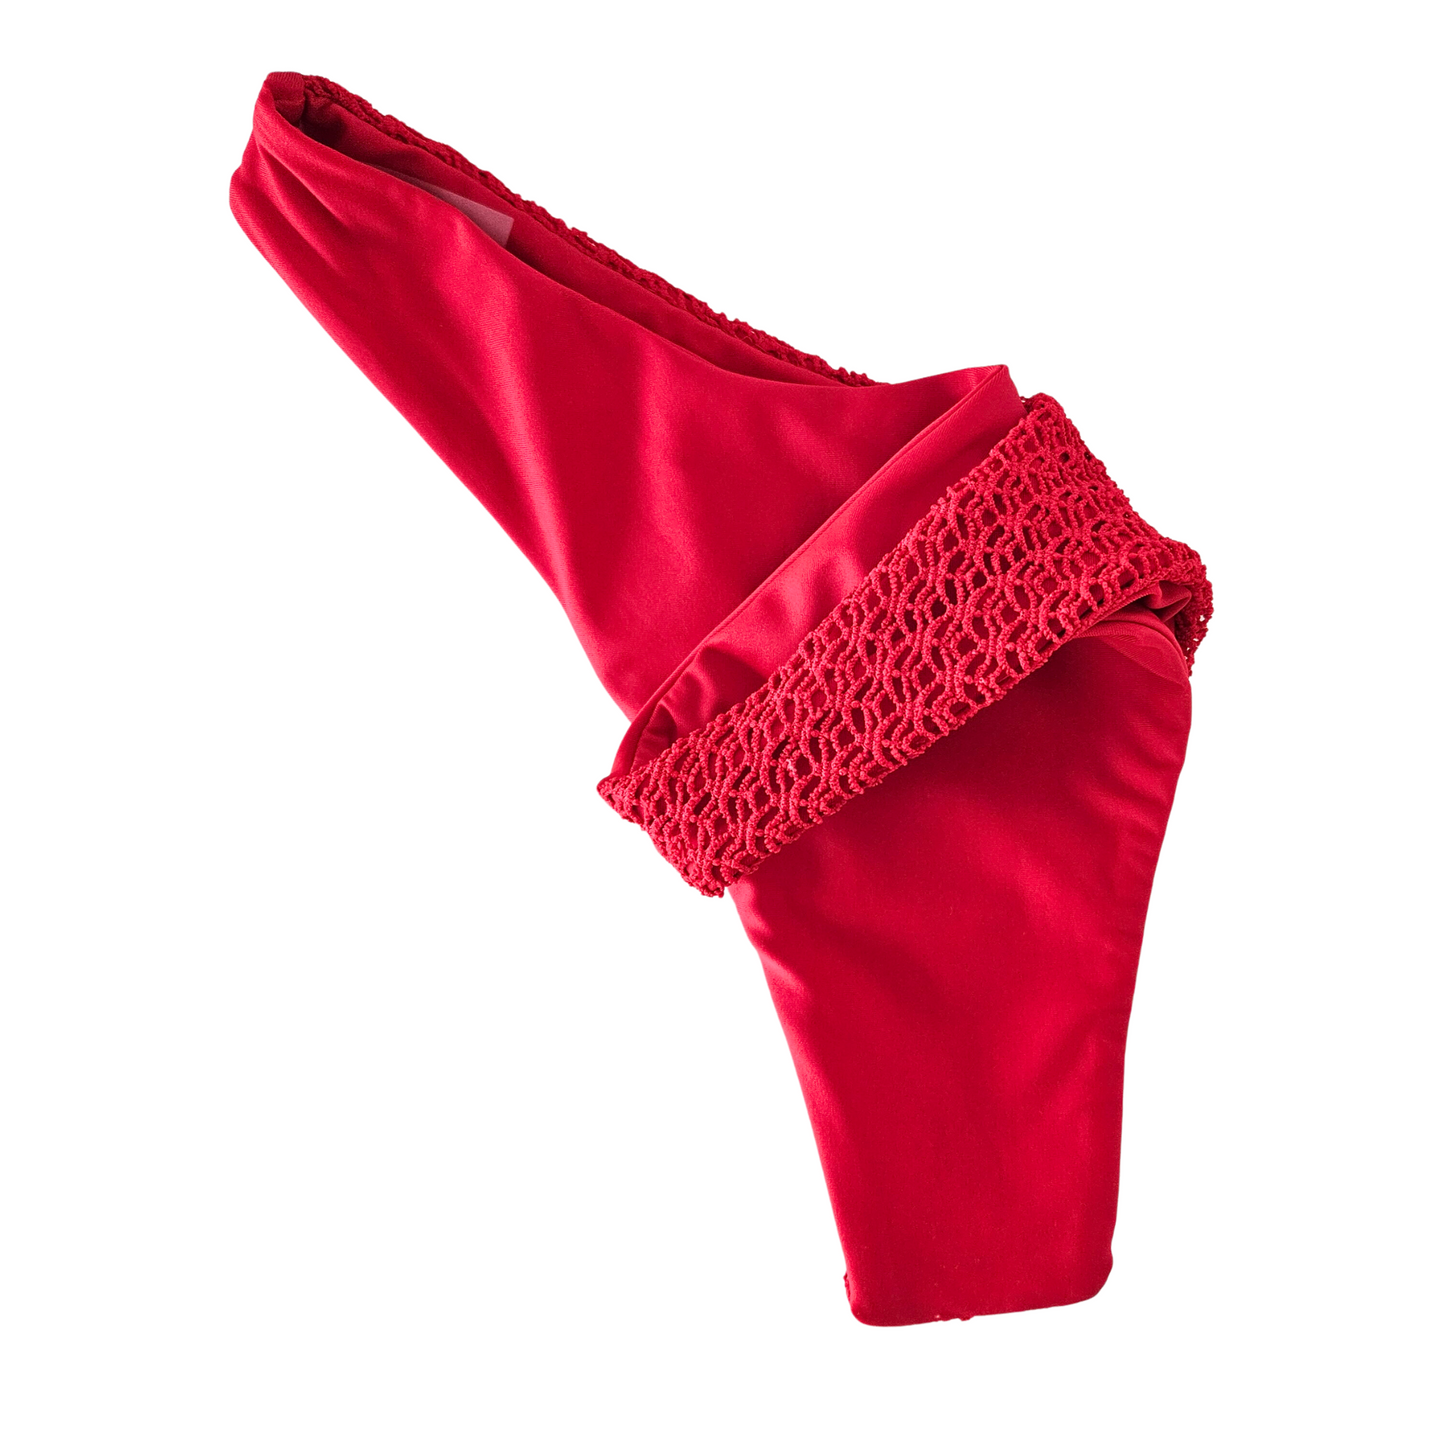 Bandeau Textured Red Tube Top Thong Bikini Set full image bottom back